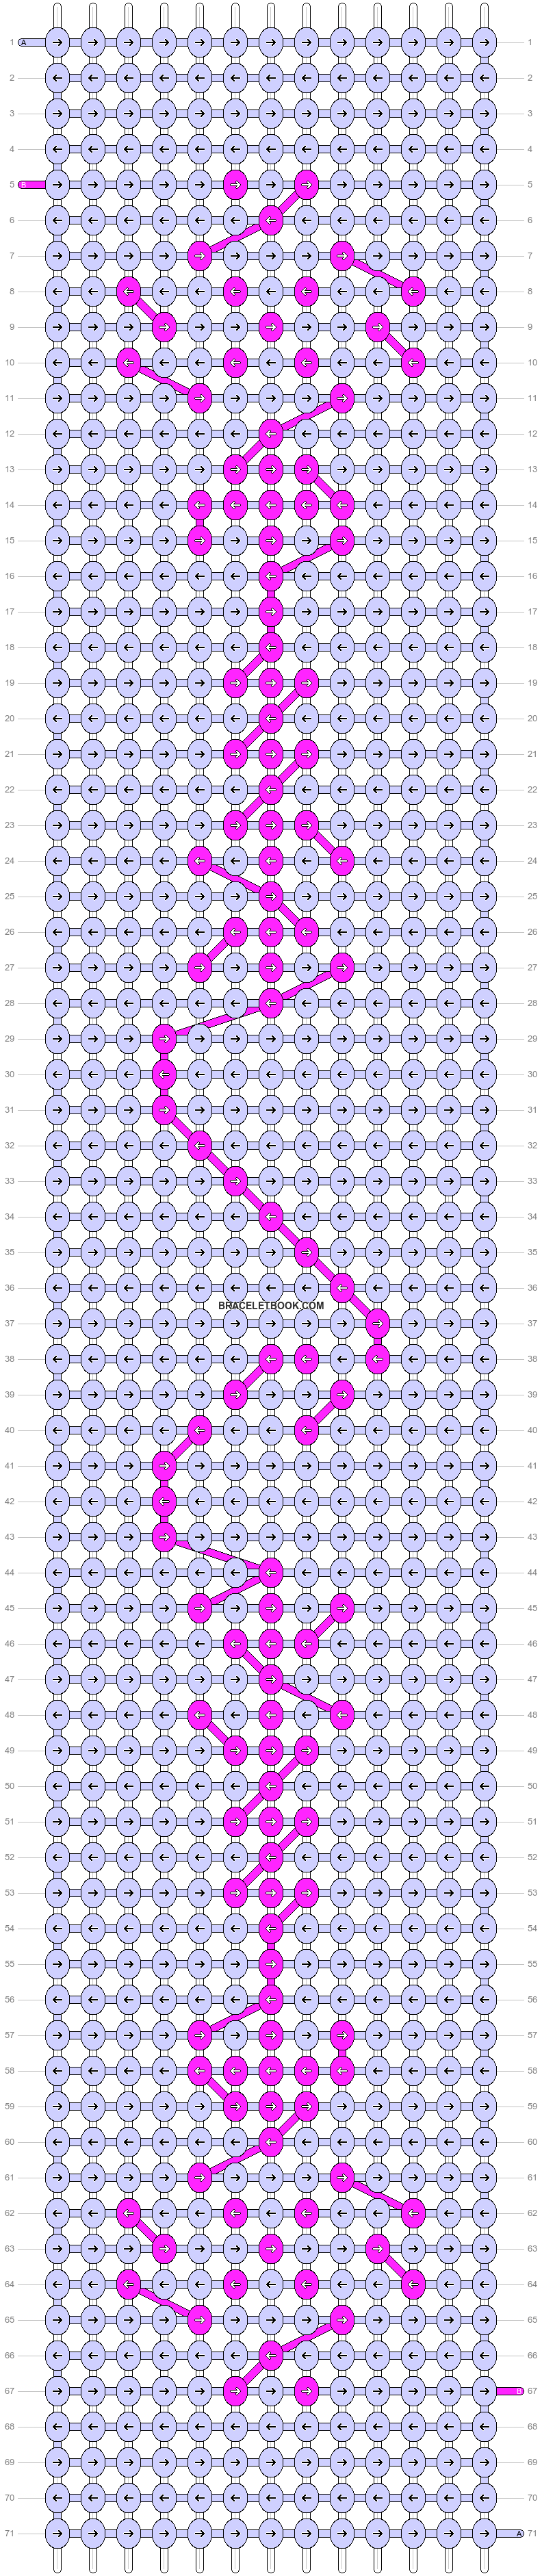 Alpha pattern #57396 variation #100253 pattern